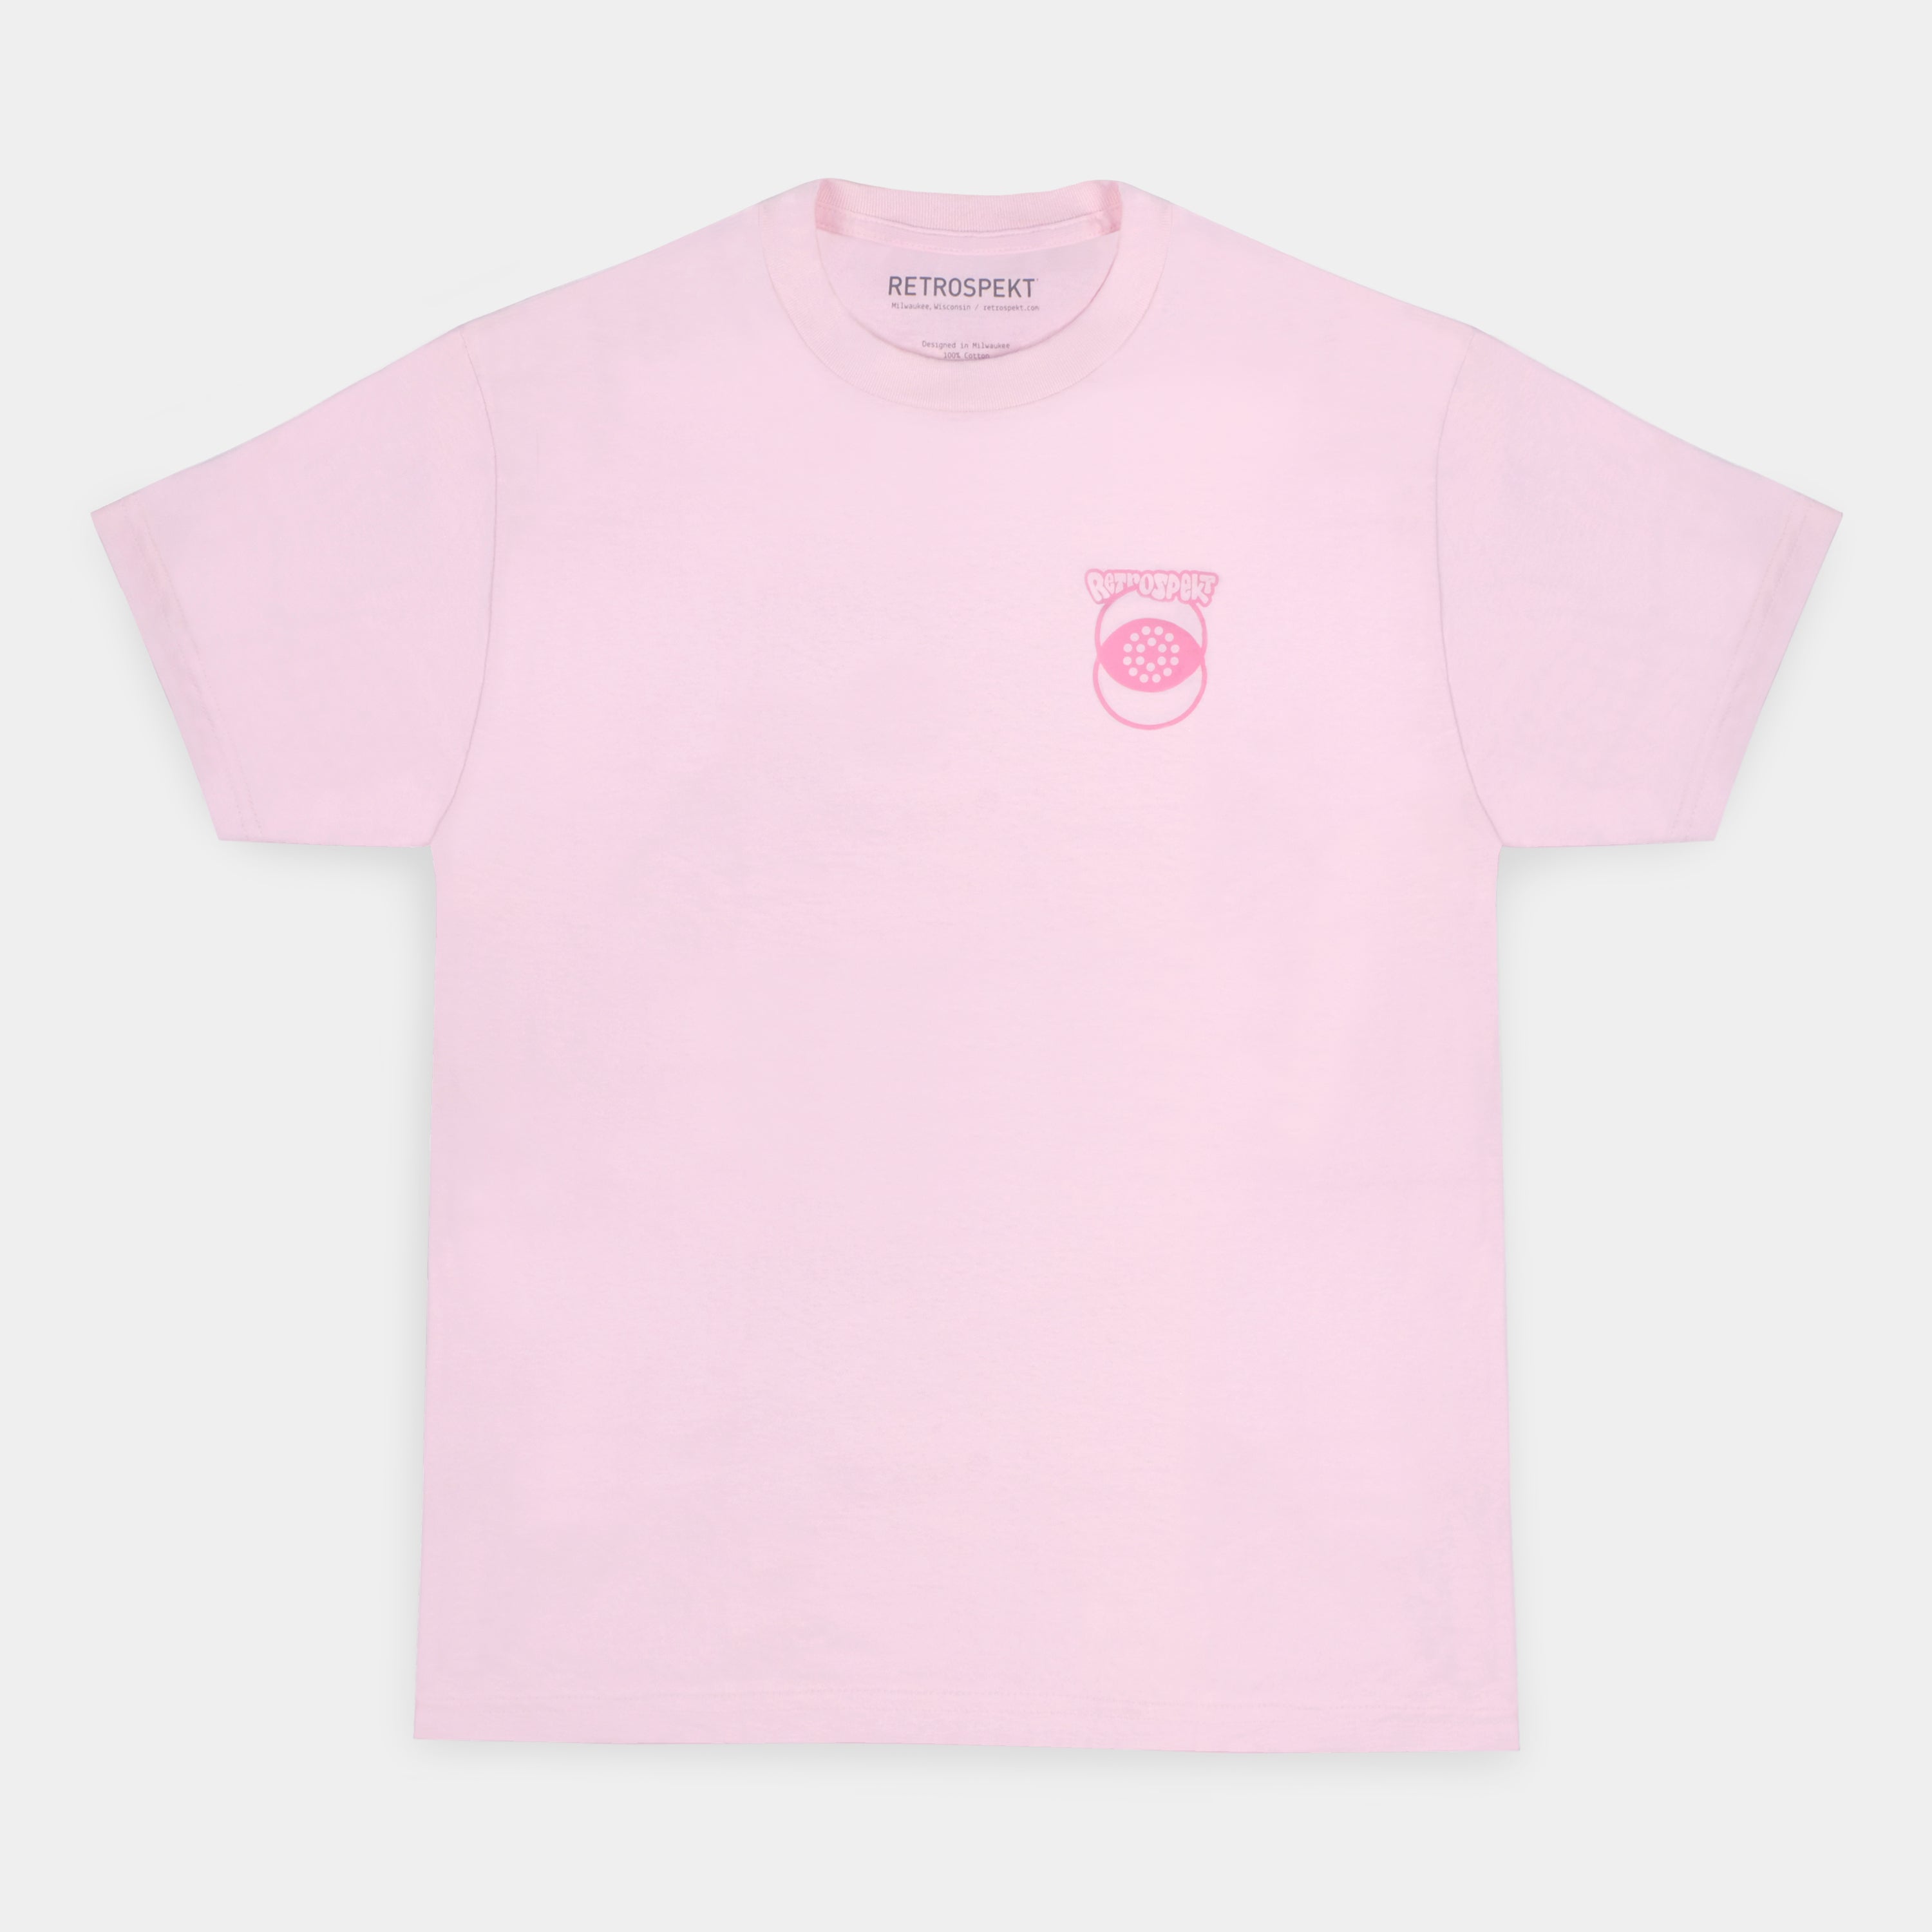 Evan Weselmann x Retrospekt Pink T-Shirt